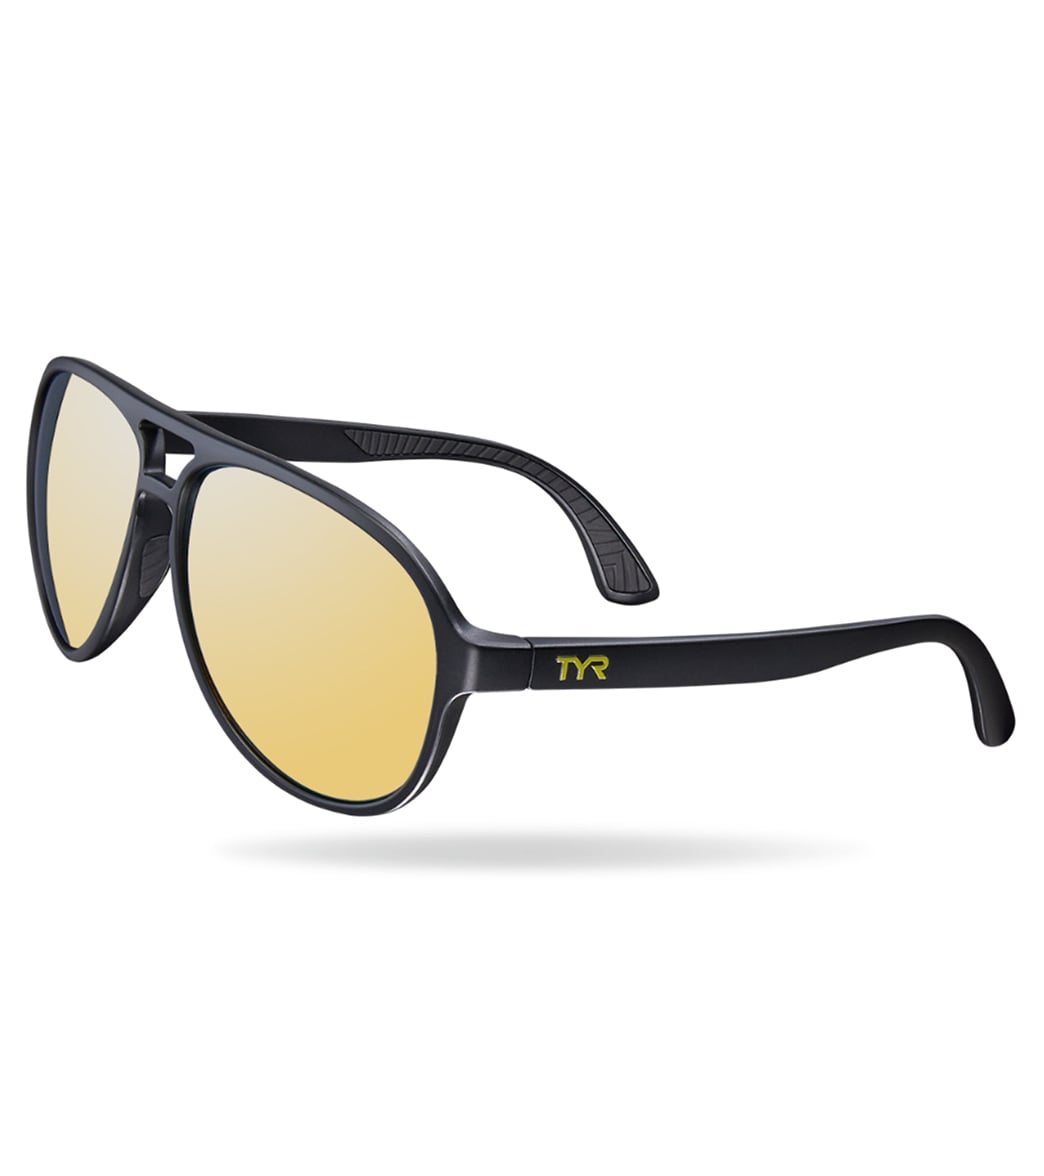 TYR Men's Goldenwest Aviator Large Sunglasses - Gold/Black - Swimoutlet.com